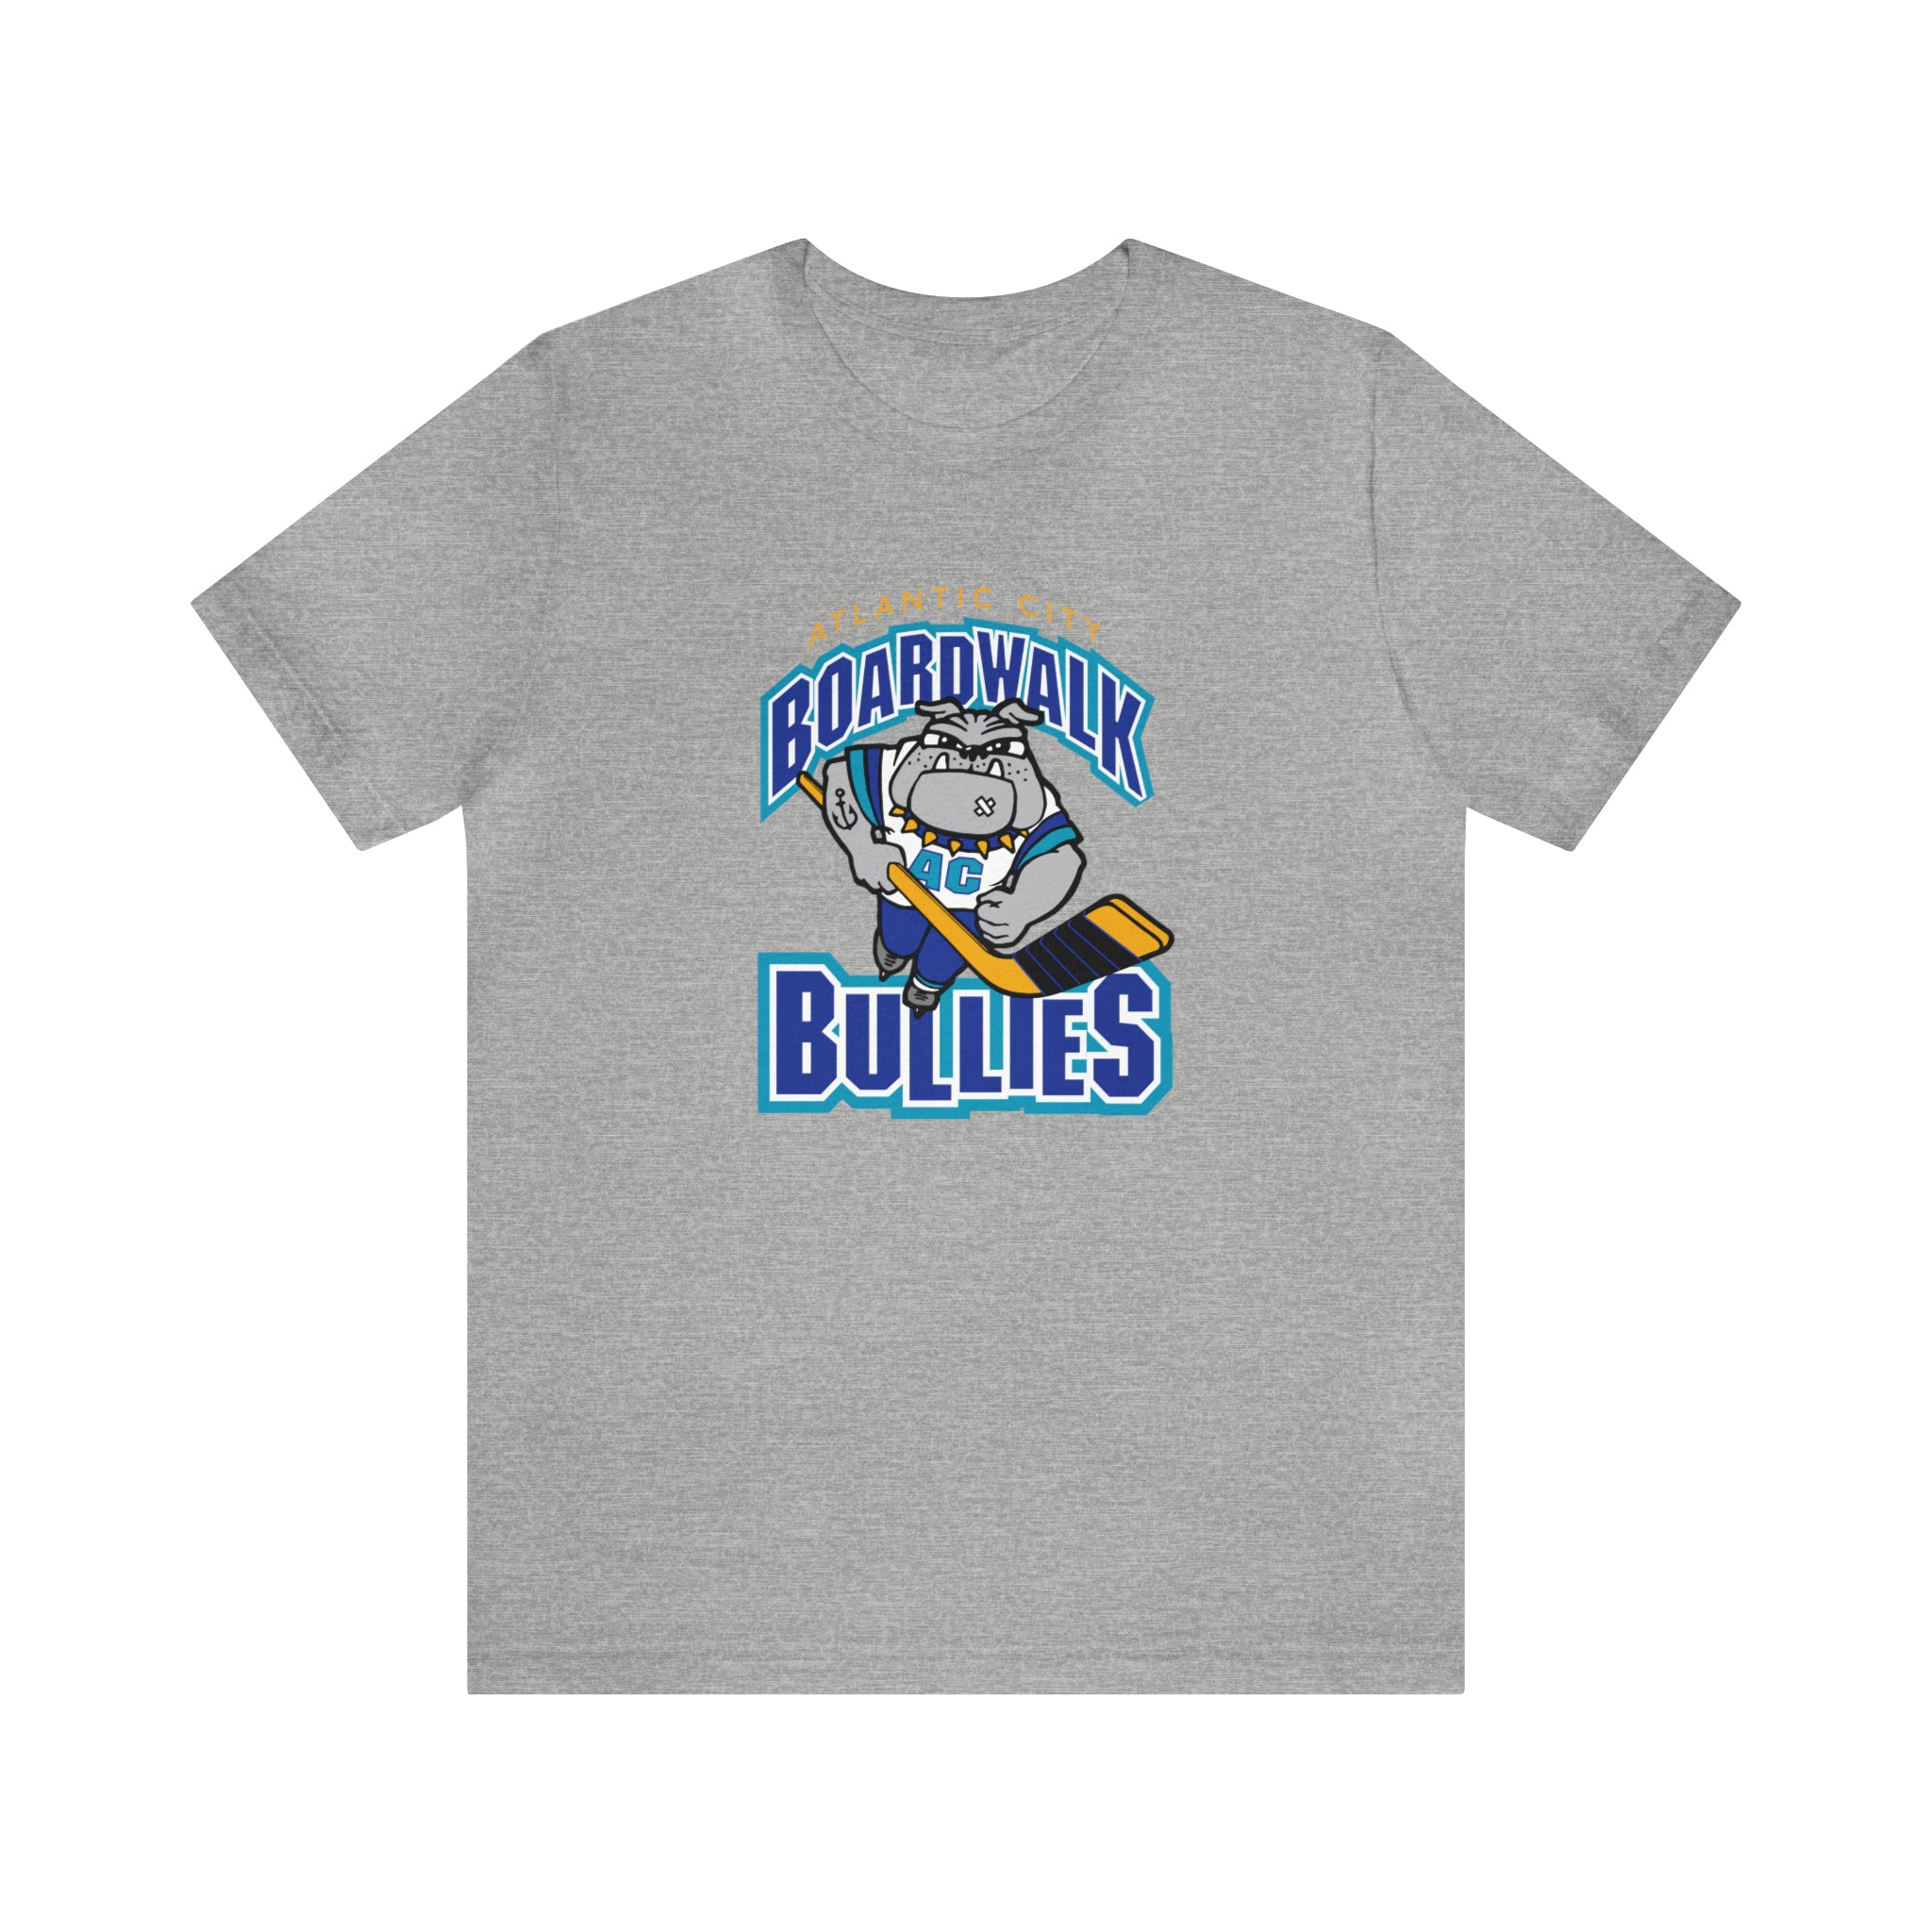 Men's Pro Standard Royal Chicago Cubs Championship T-Shirt